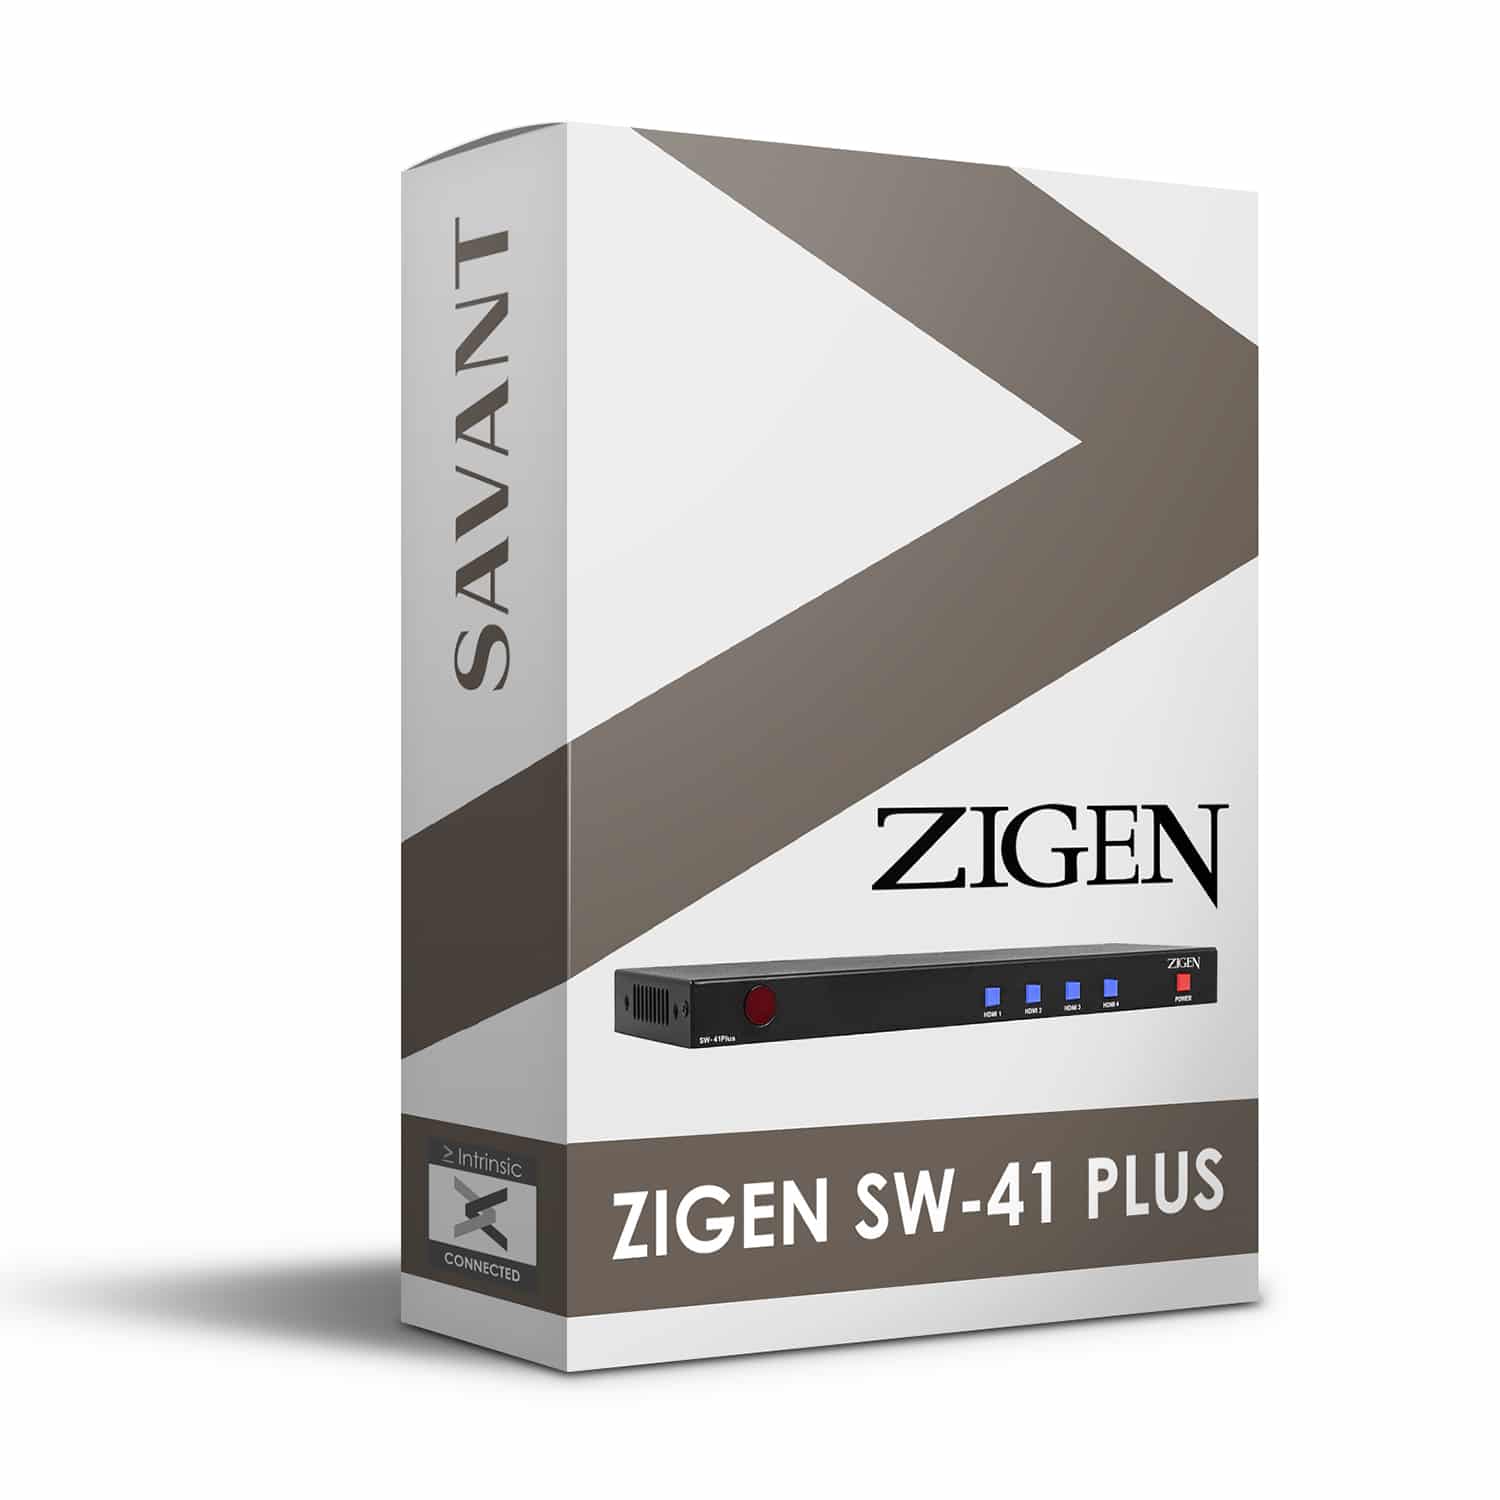 Zigen SW-41 Plus Profile for Savant